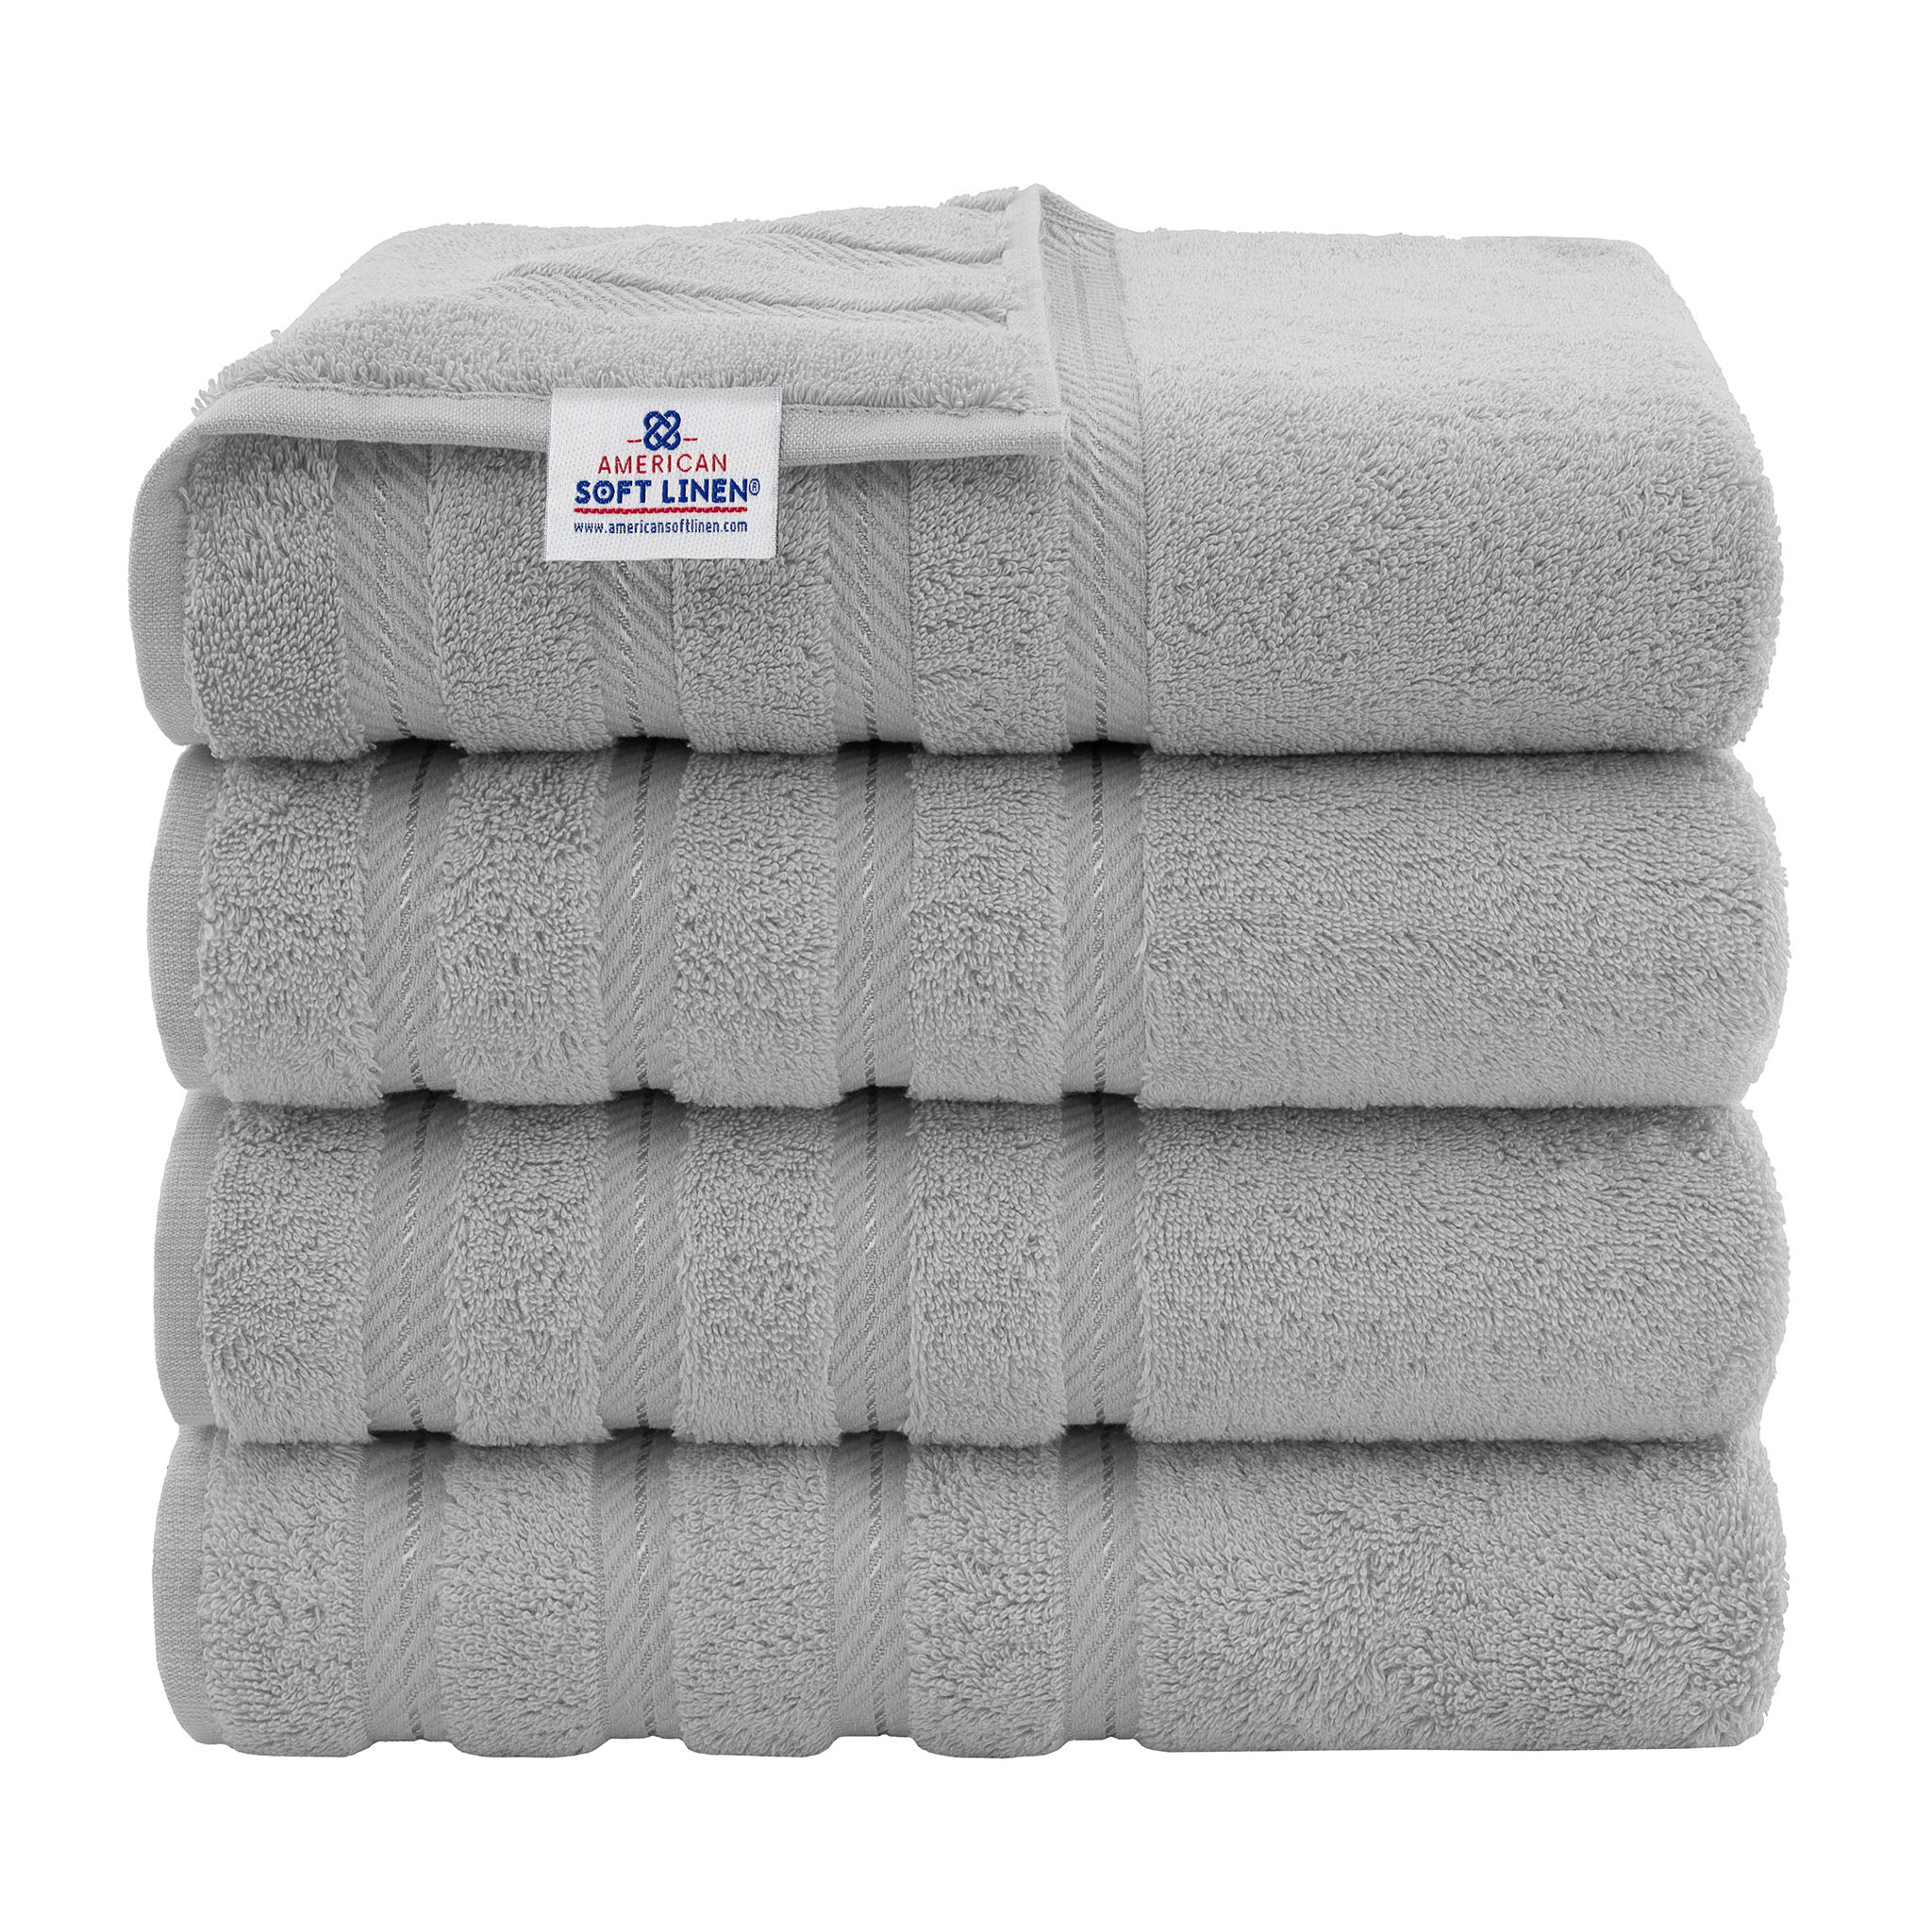 American Soft Linen 100% Turkish Cotton 4 Pack Bath Towel Set Wholesale rockridge-gray-1